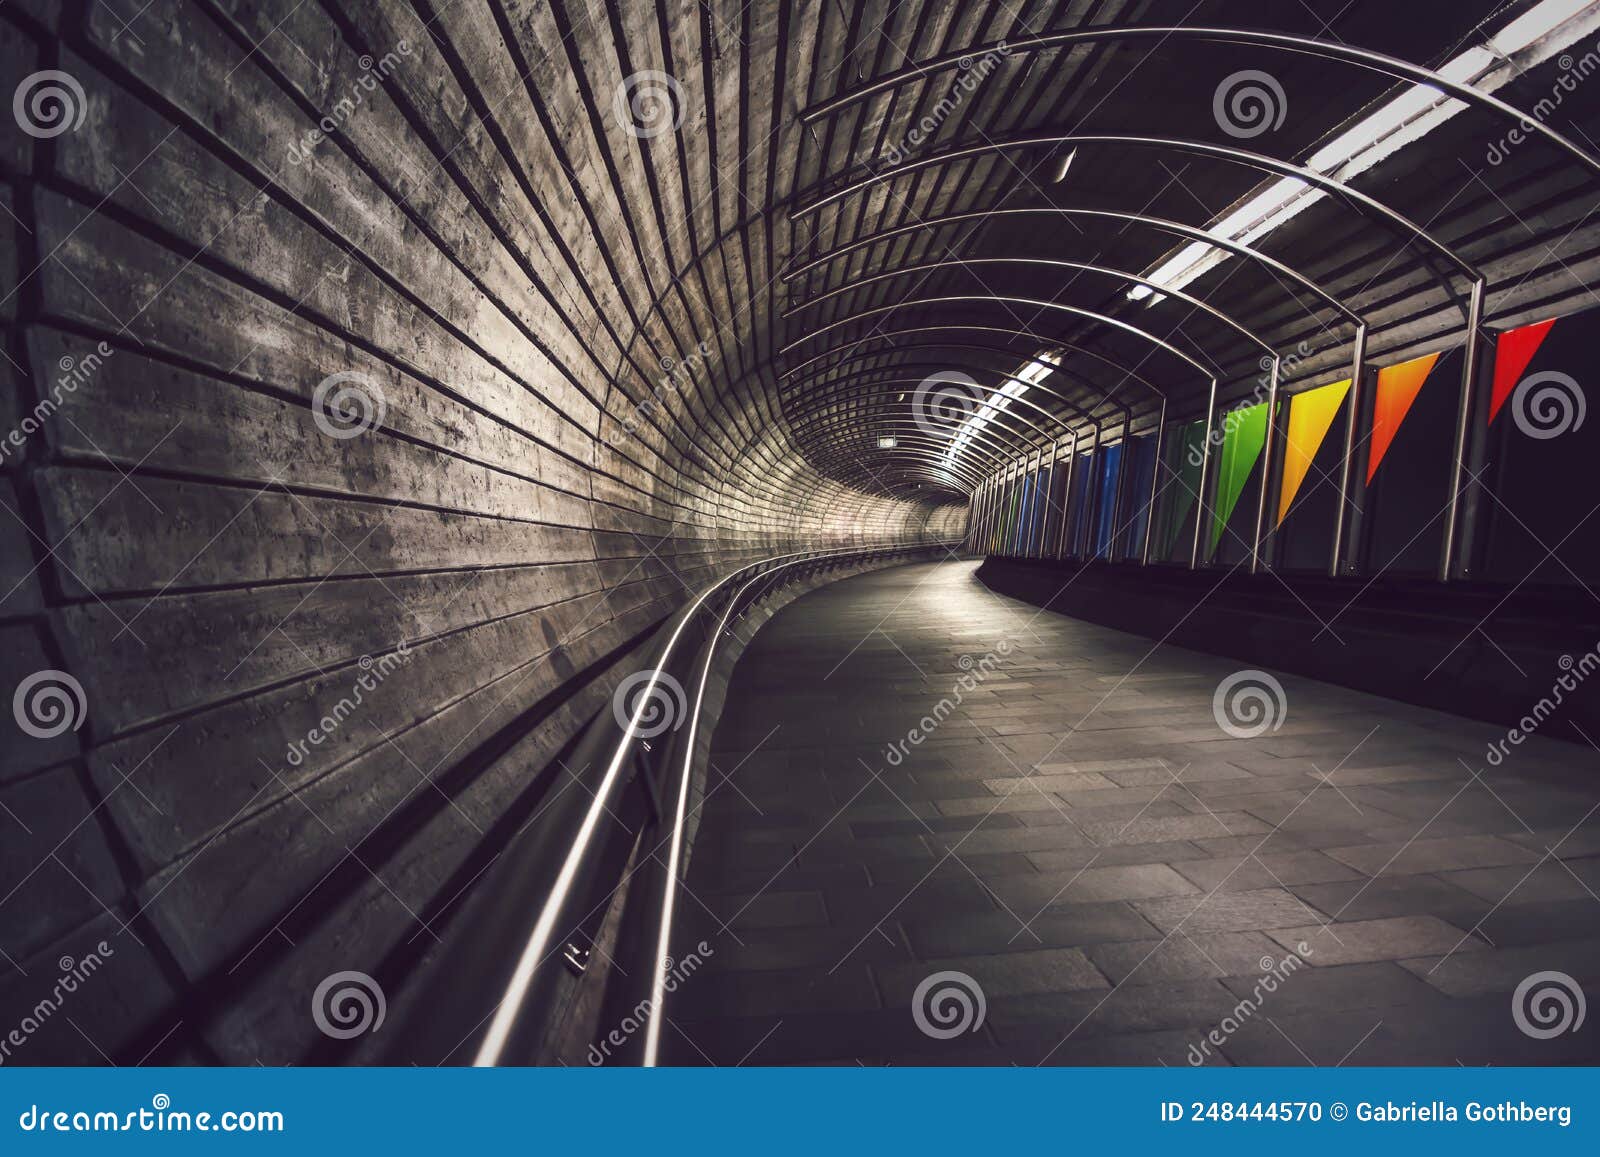 deep perspective into dark, winding underground tunnel